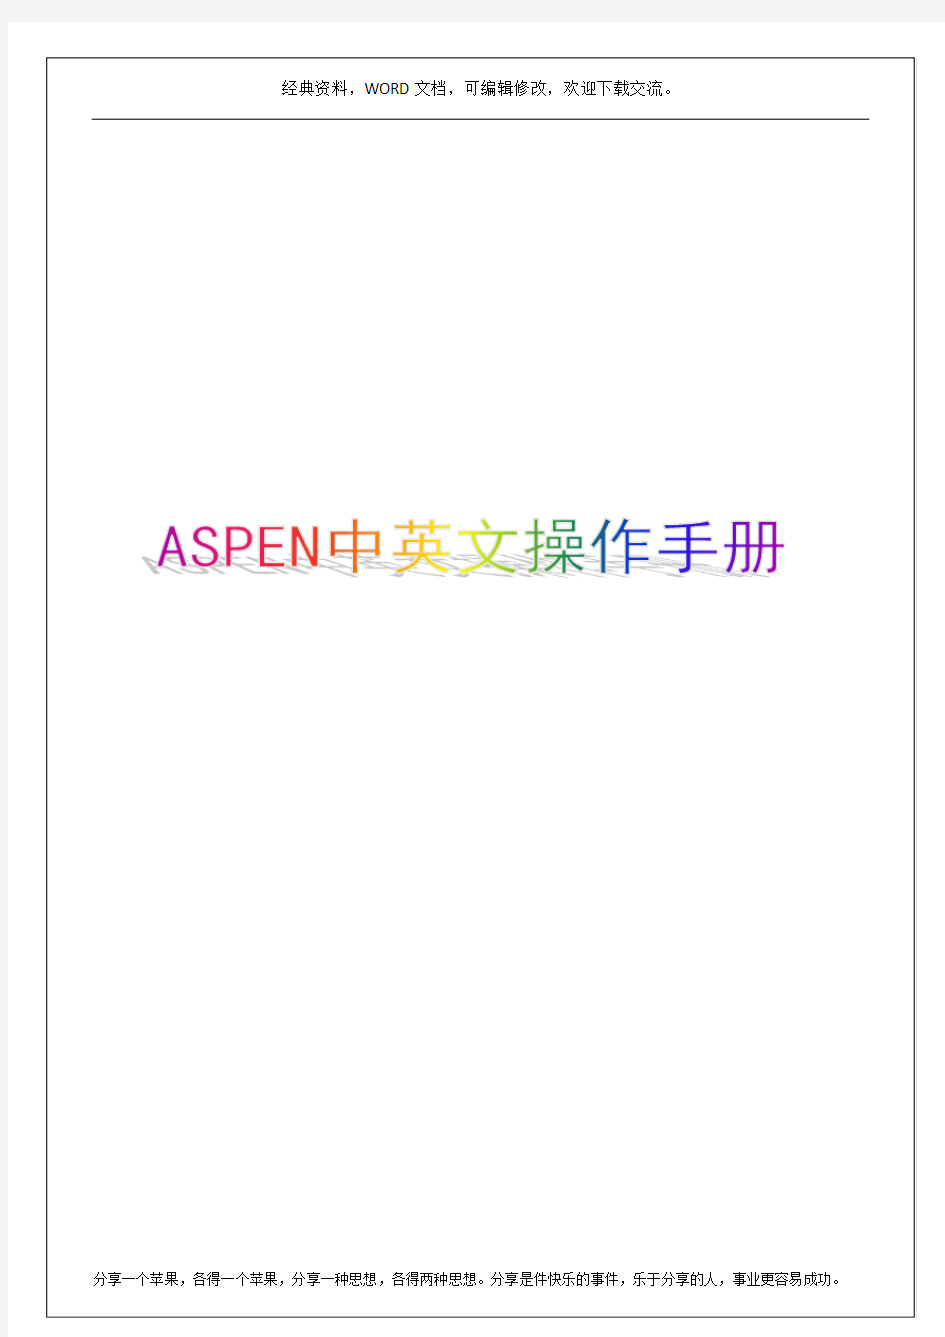 ASPEN中英文操作手册5p